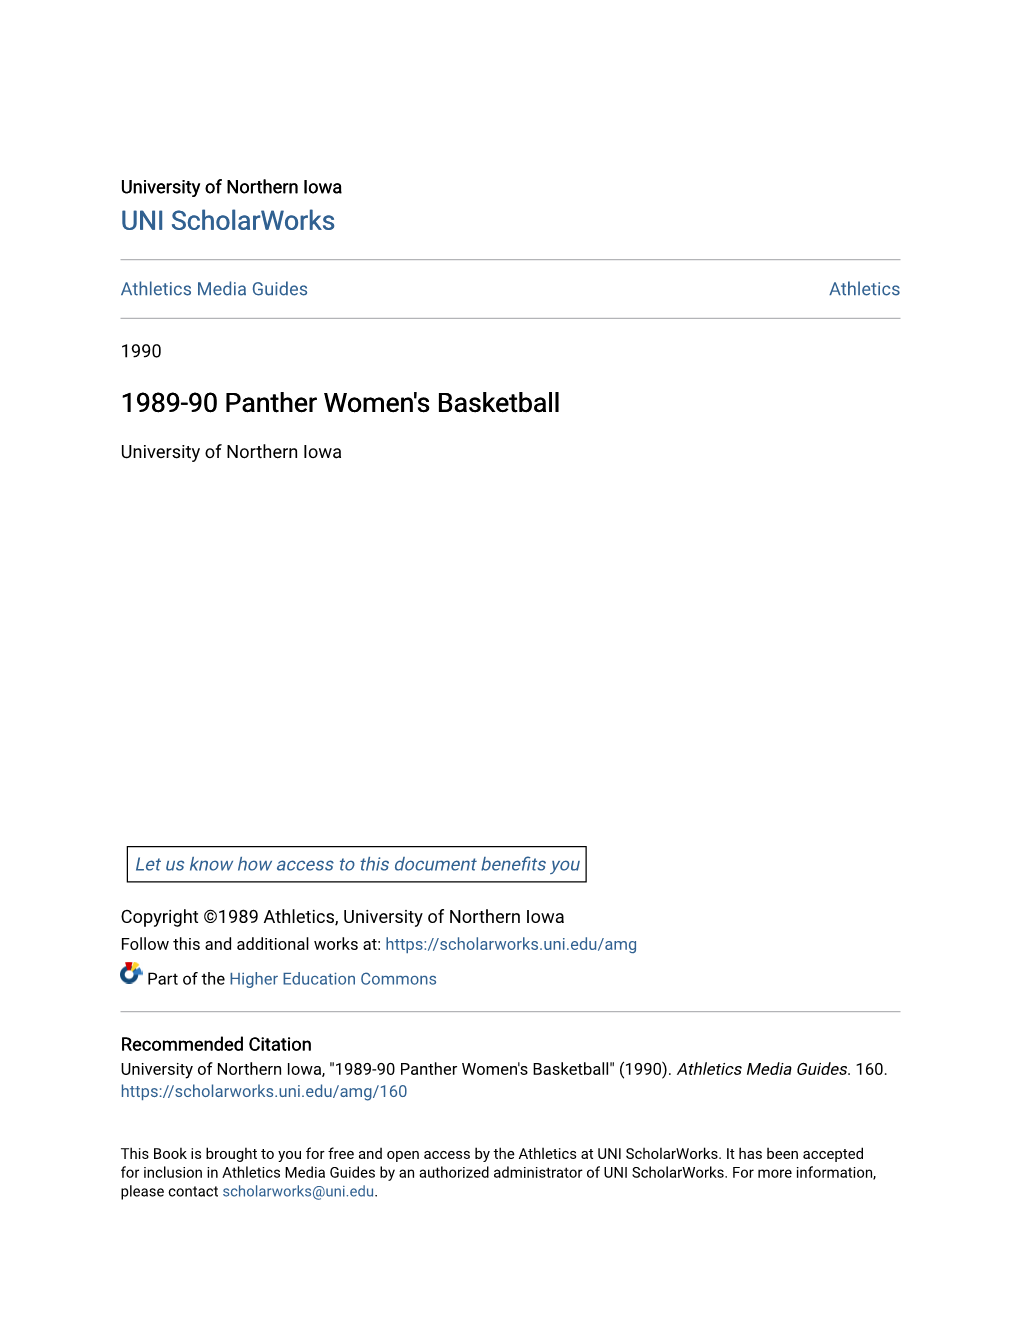 1989-90 Panther Women's Basketball